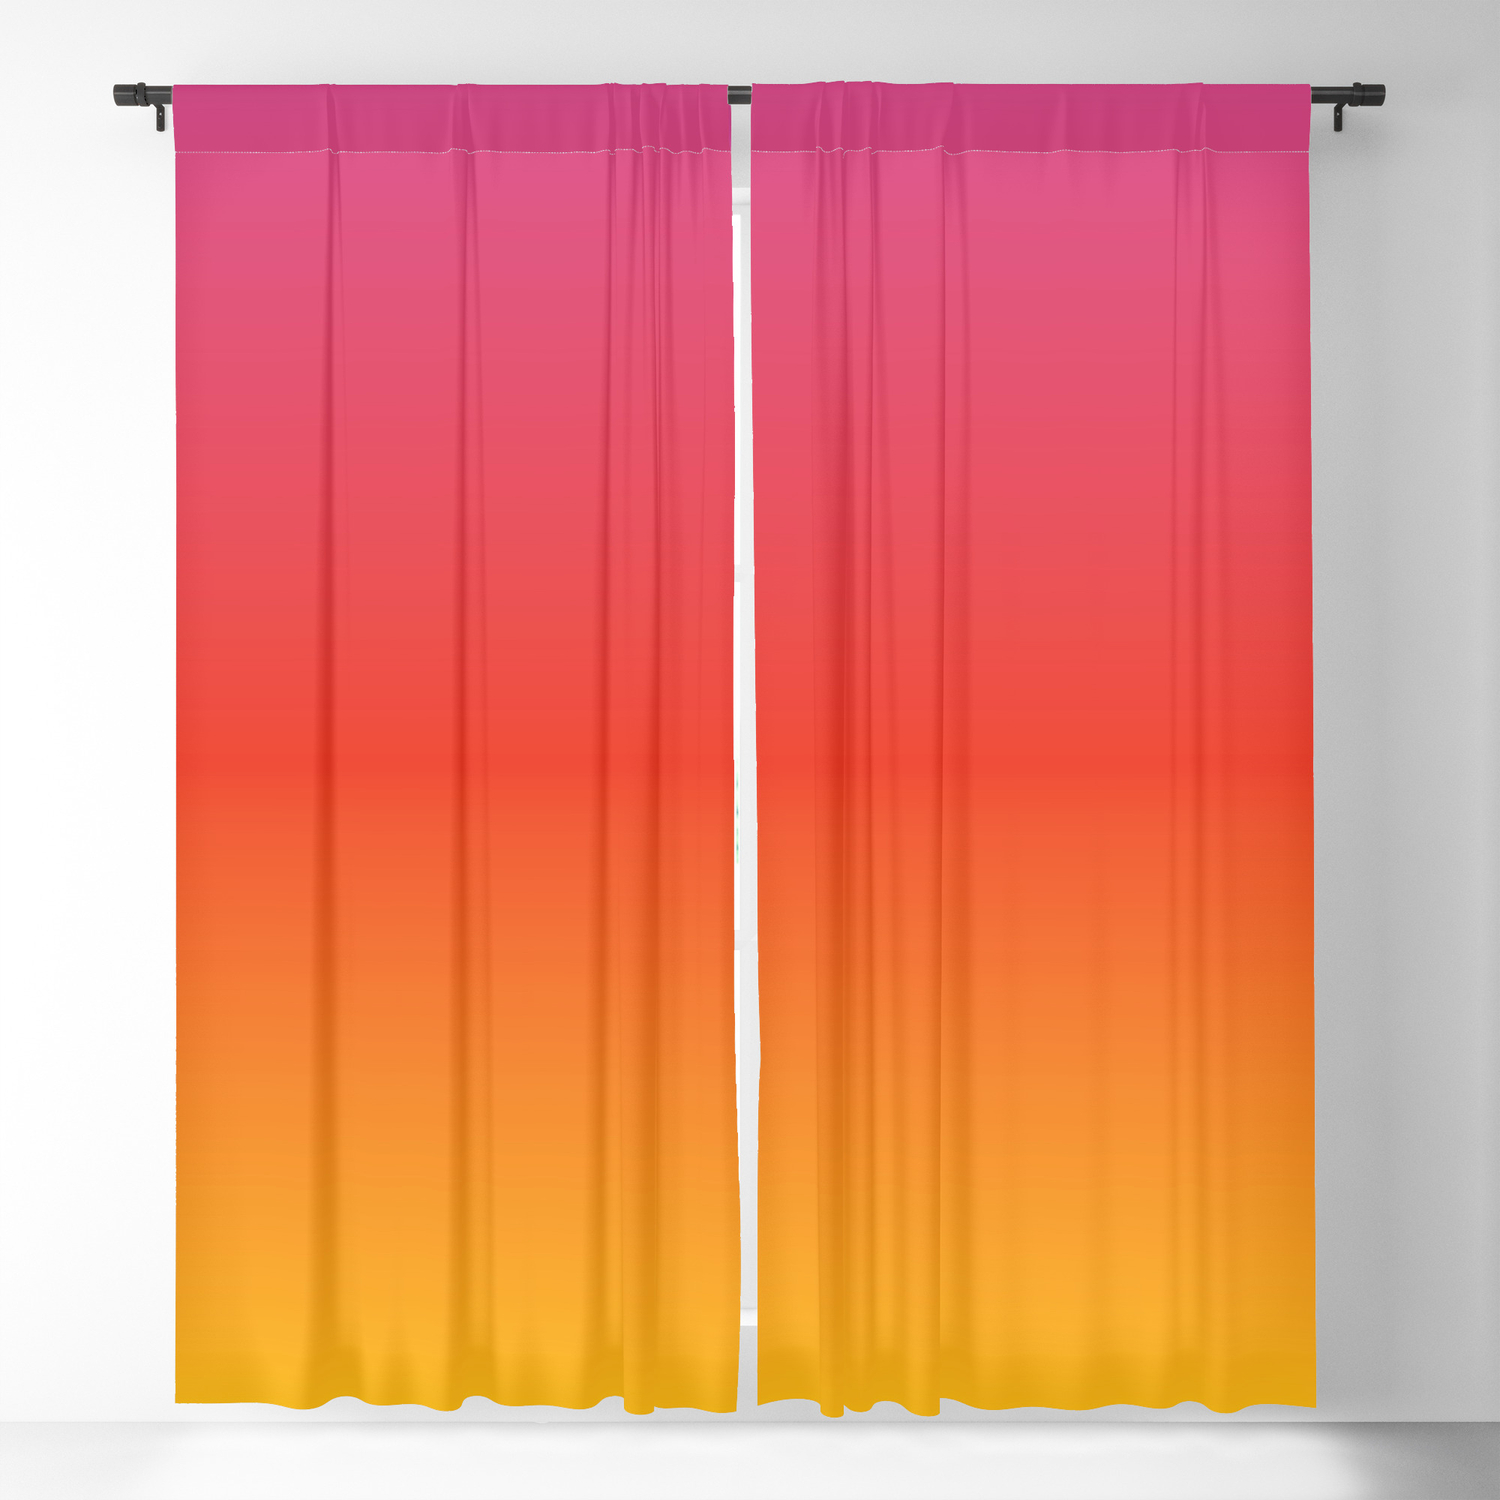 Sky Grant Blackout Curtain, Red Orange Blackout Curtains